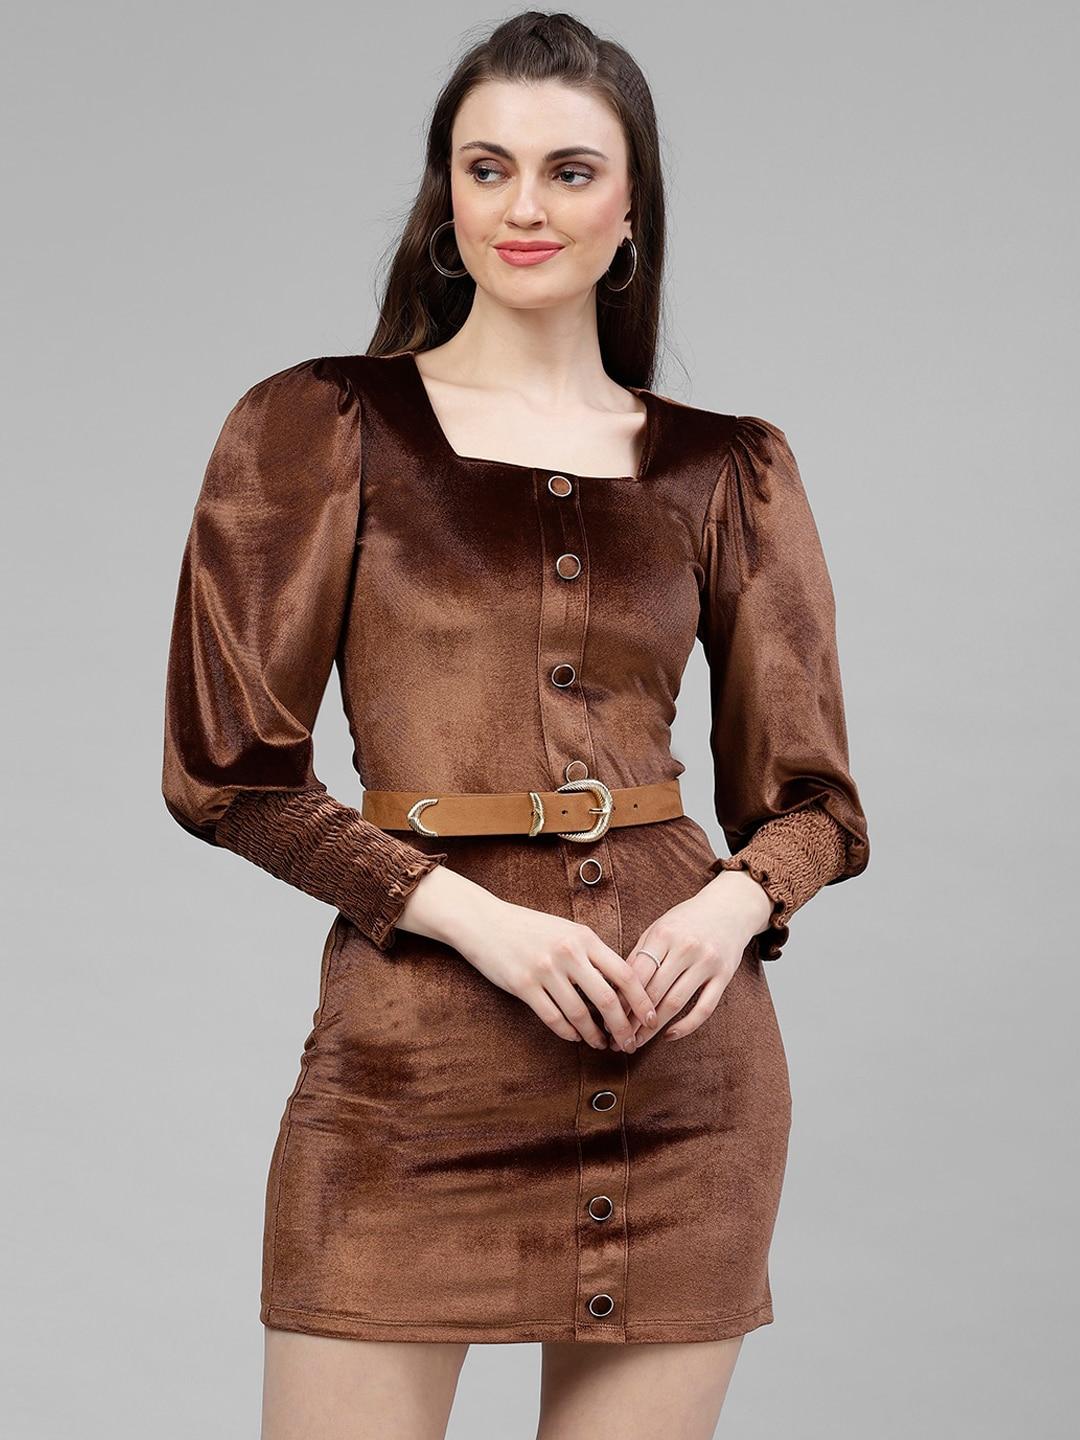 kassually women brown solid sheath dress